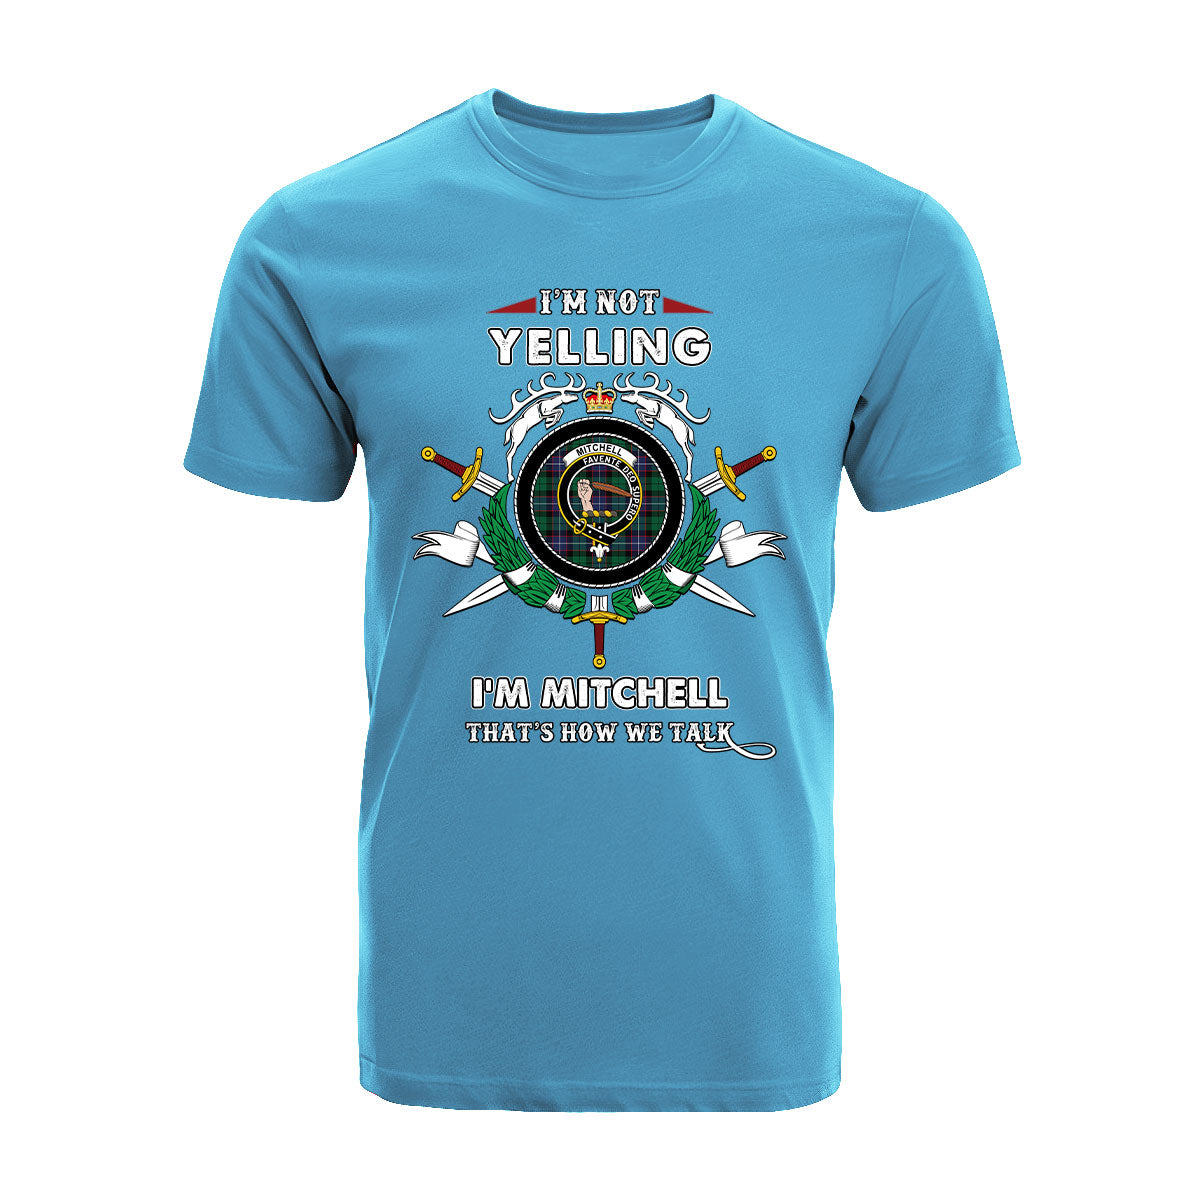 Mitchell Tartan Crest T-shirt - I'm not yelling style